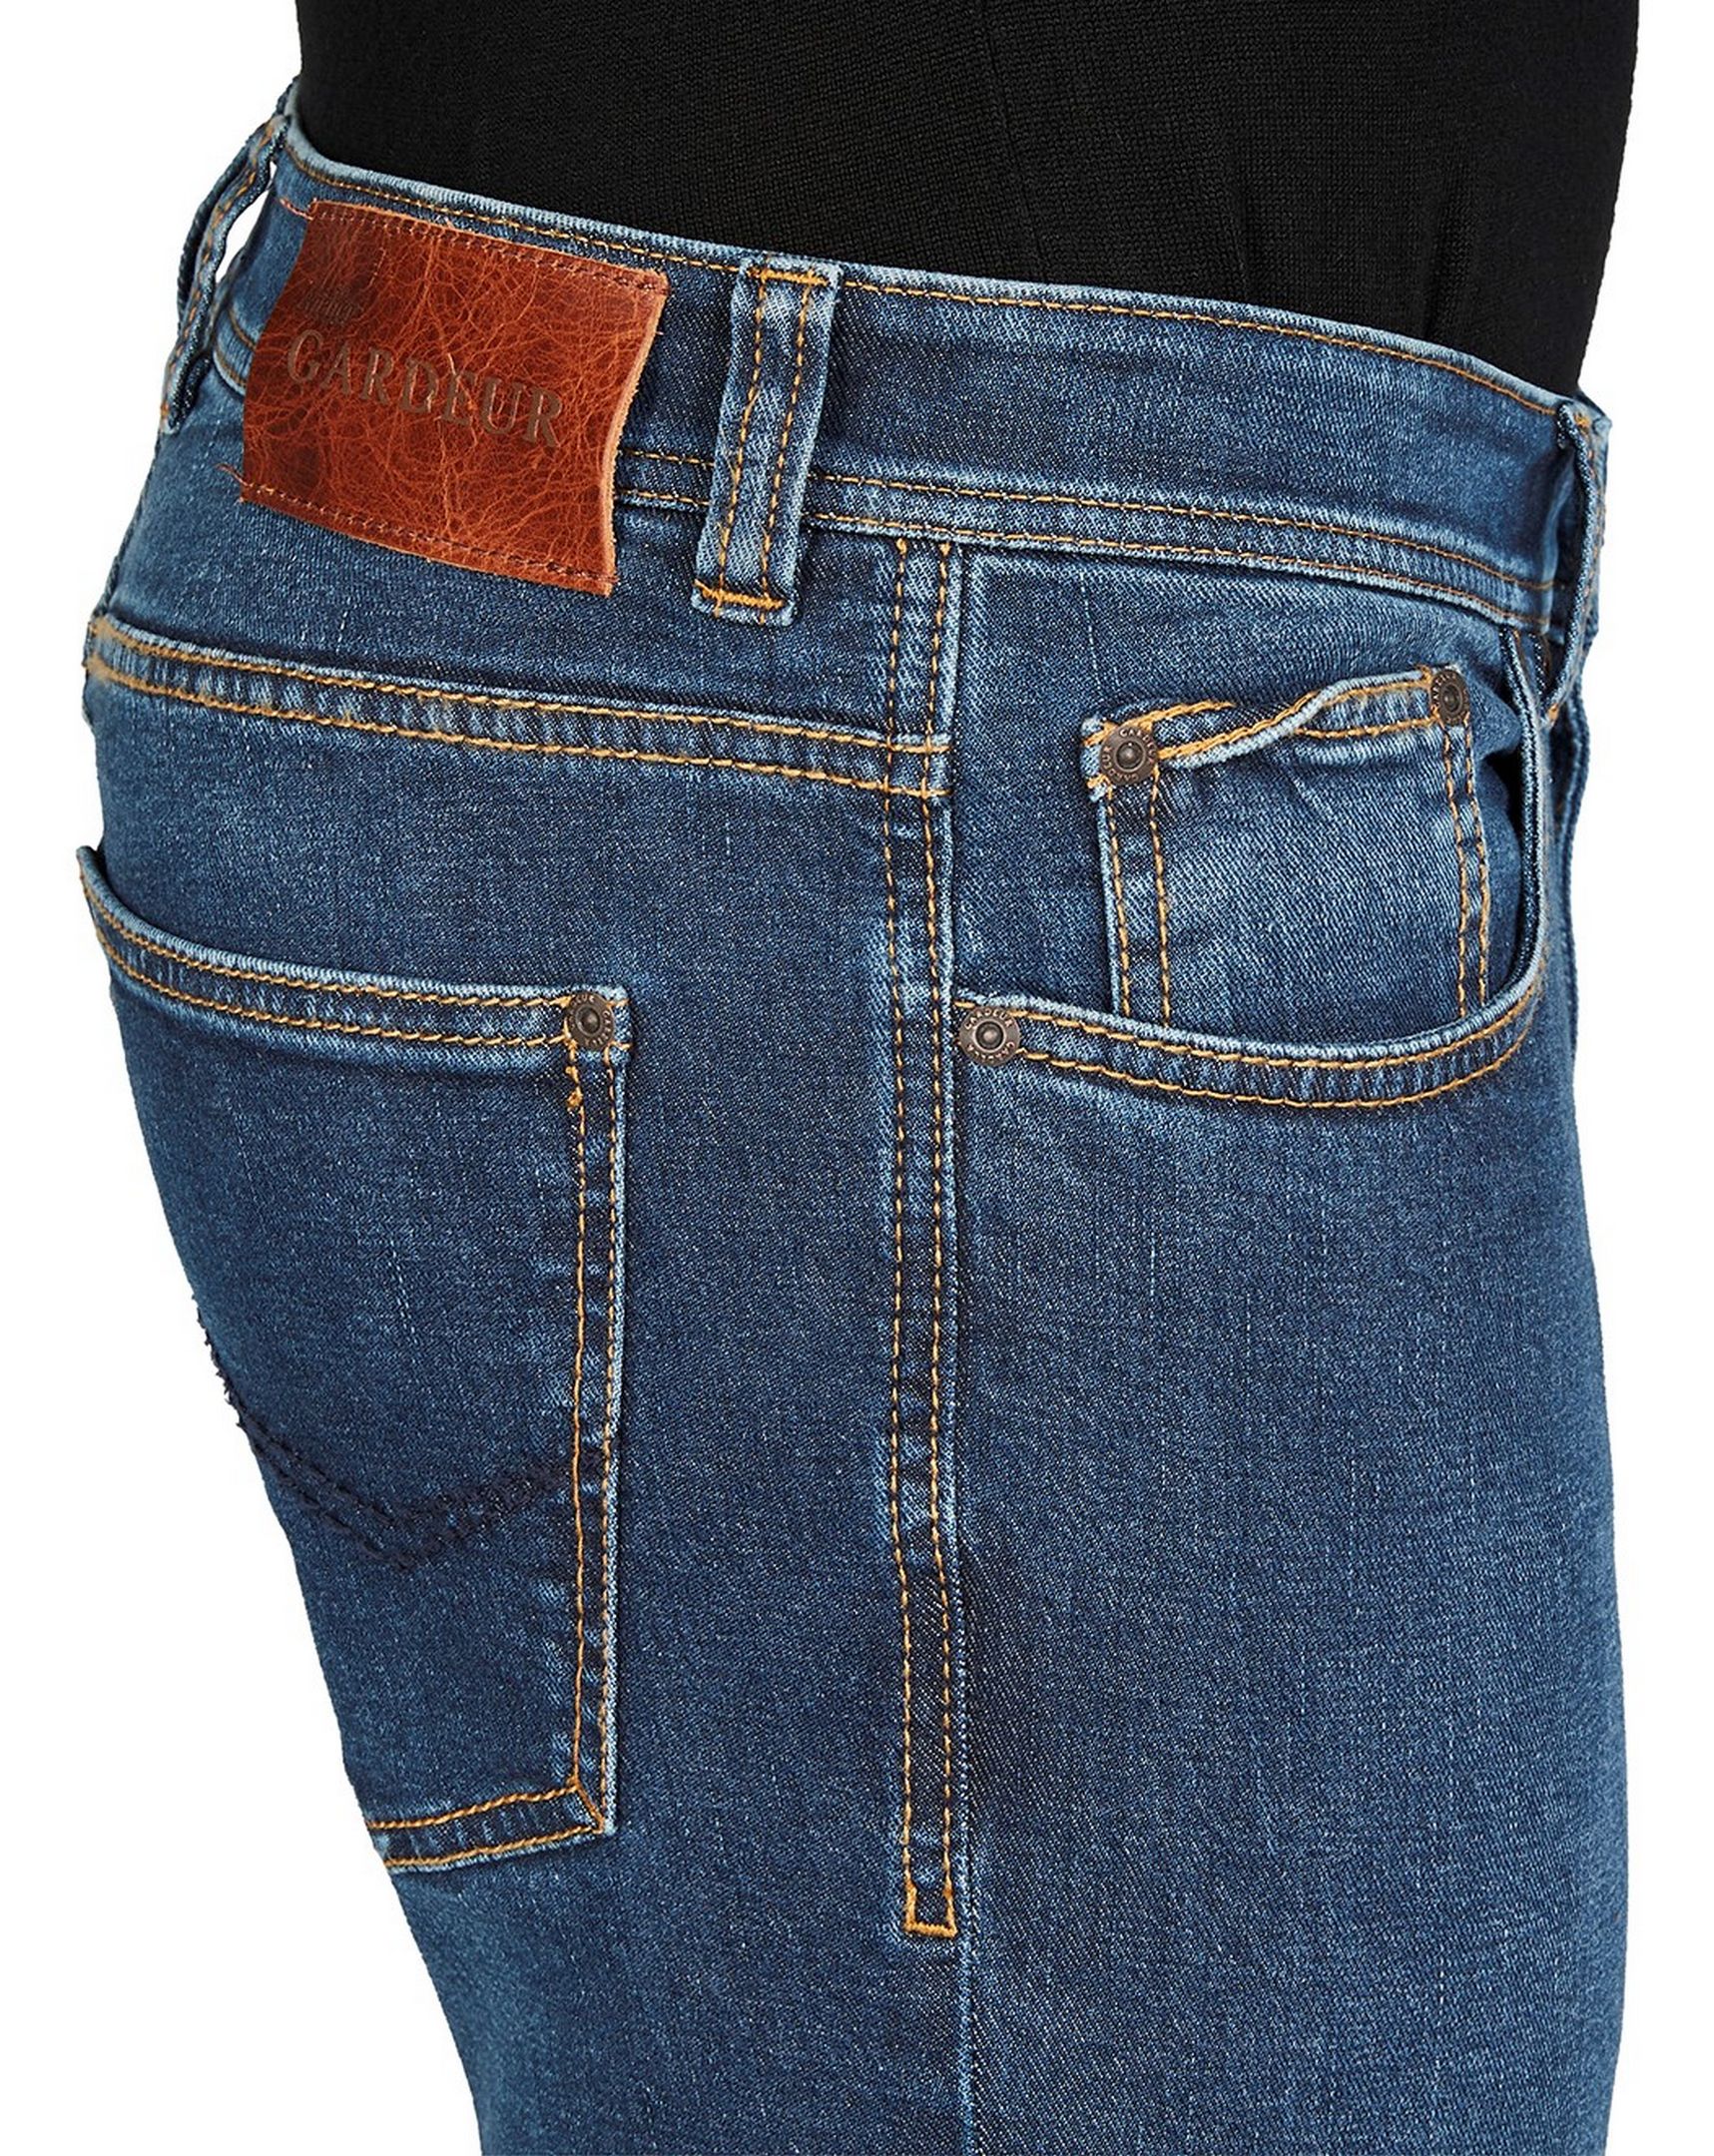 Gardeur Sandro Slim-Fit Jeans Blue | Jan Rozing Men's Fashion